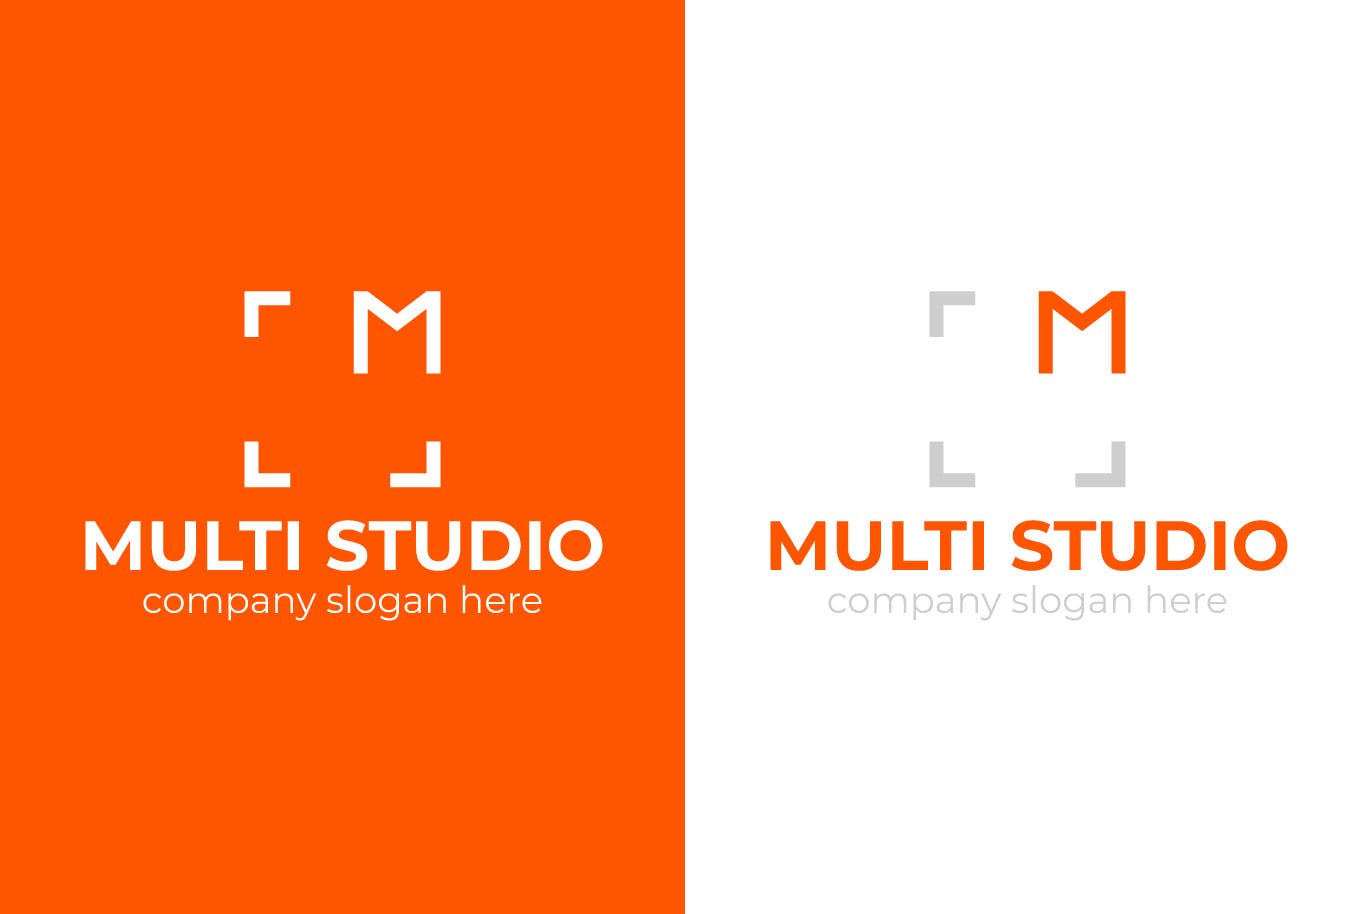 字母M创意图形企业品牌Logo设计素材库精选模板 Letter Based Business Logo Template插图(1)